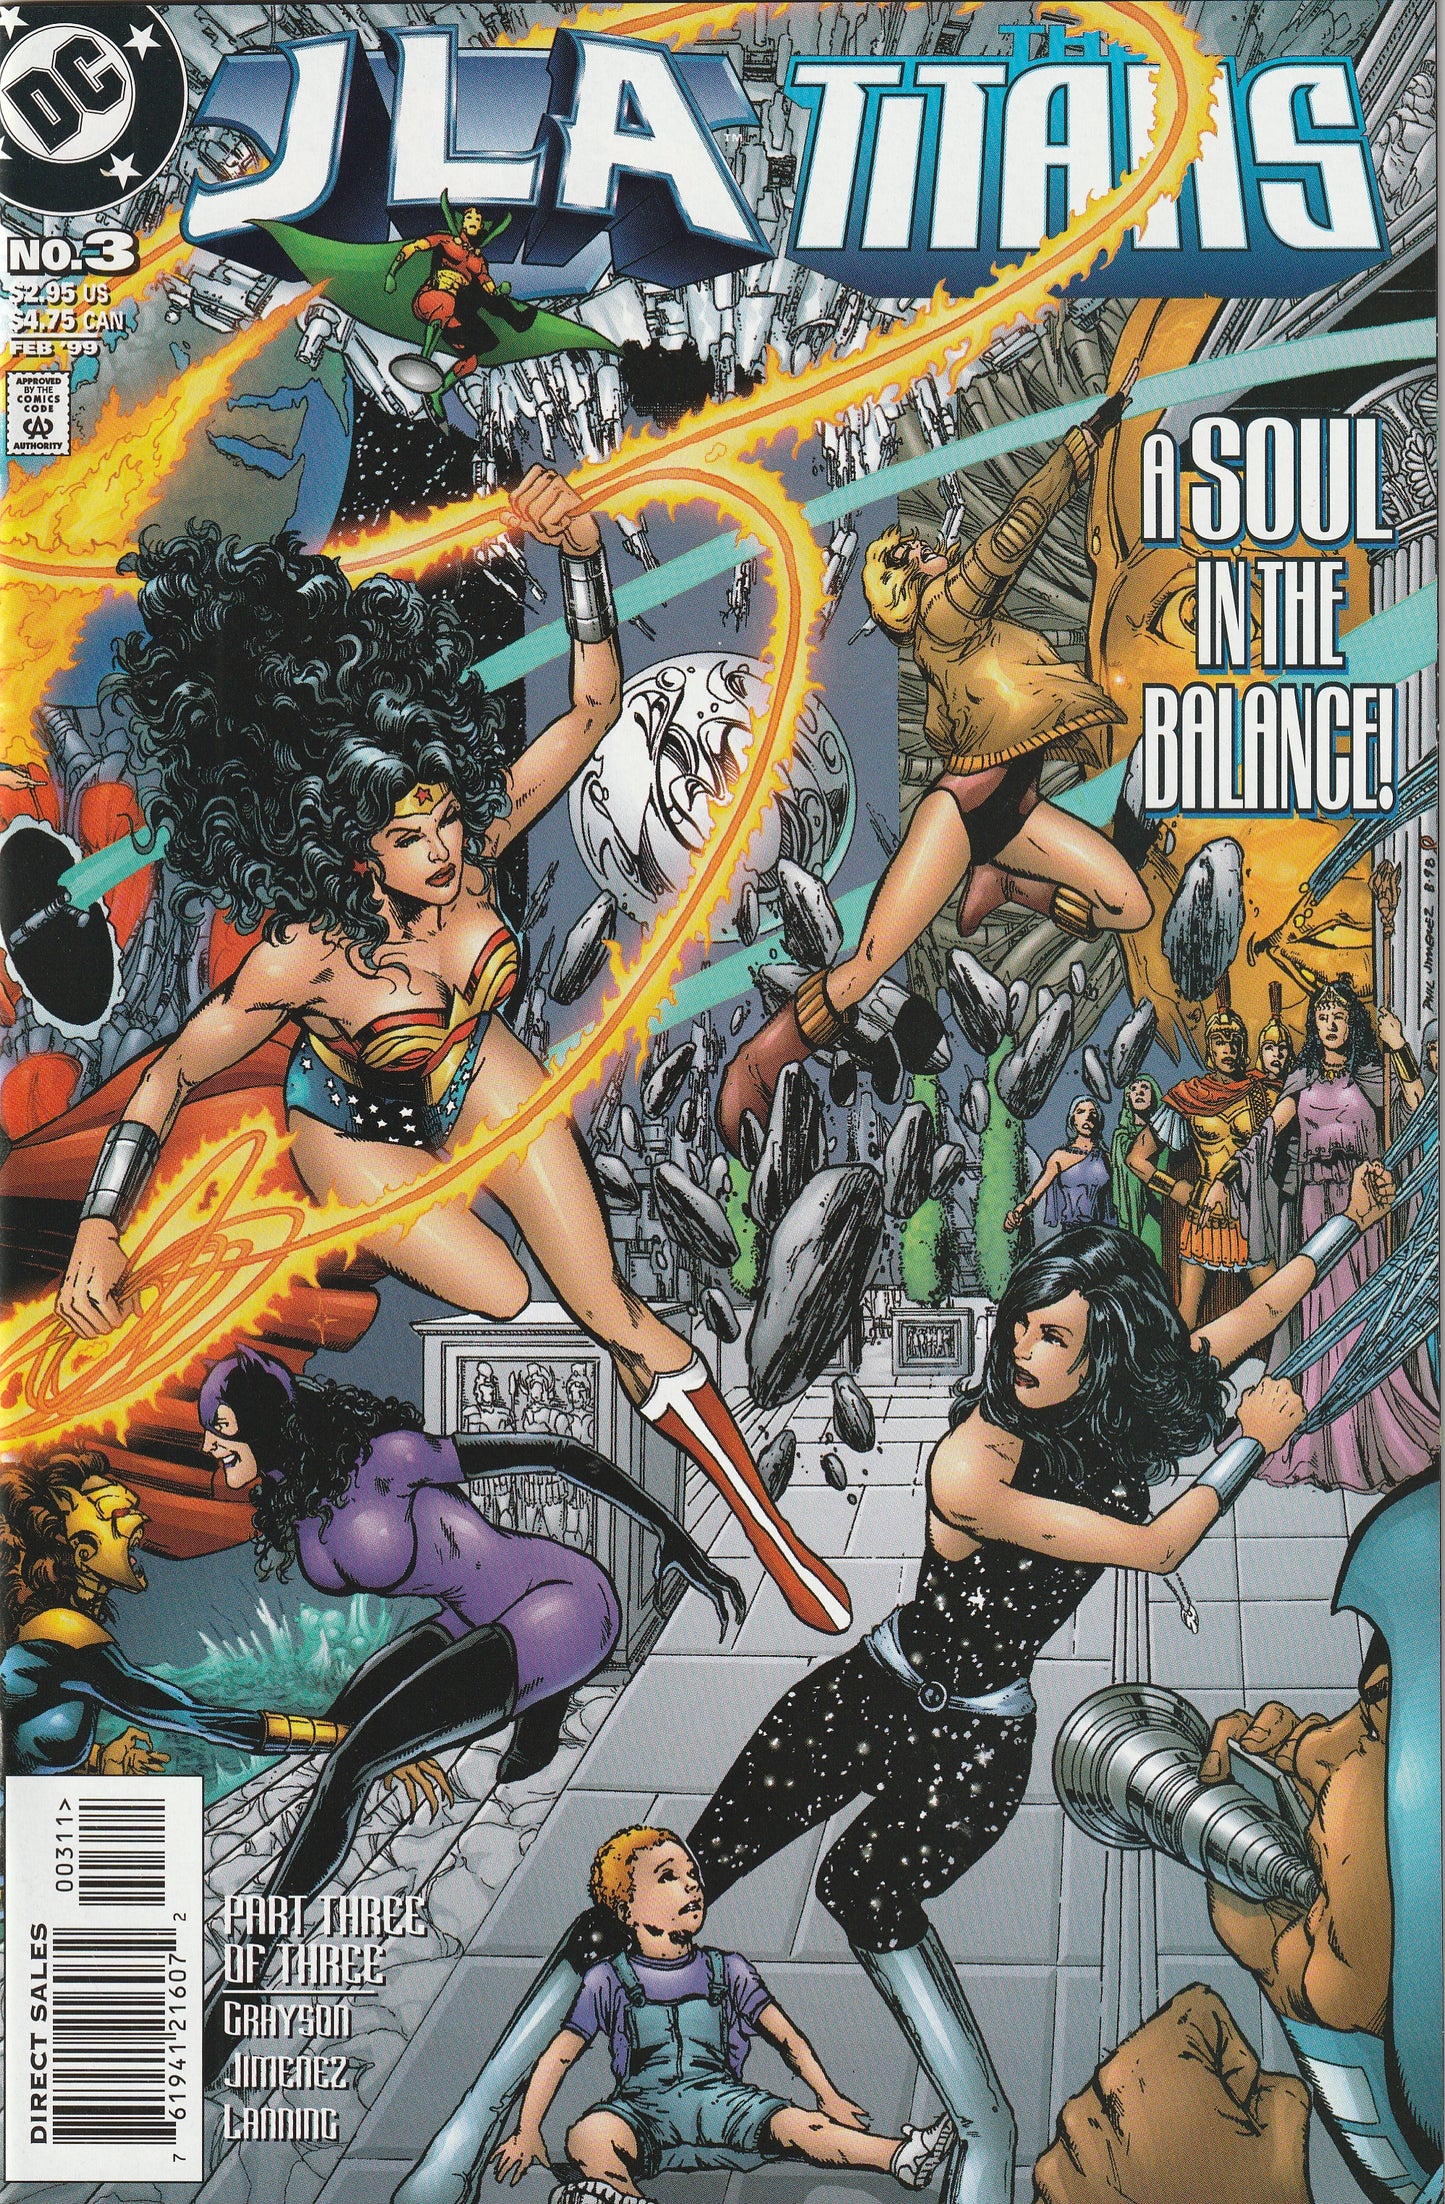 JLA: The Titans (1998-1999) - Complete 3 issue mini-series